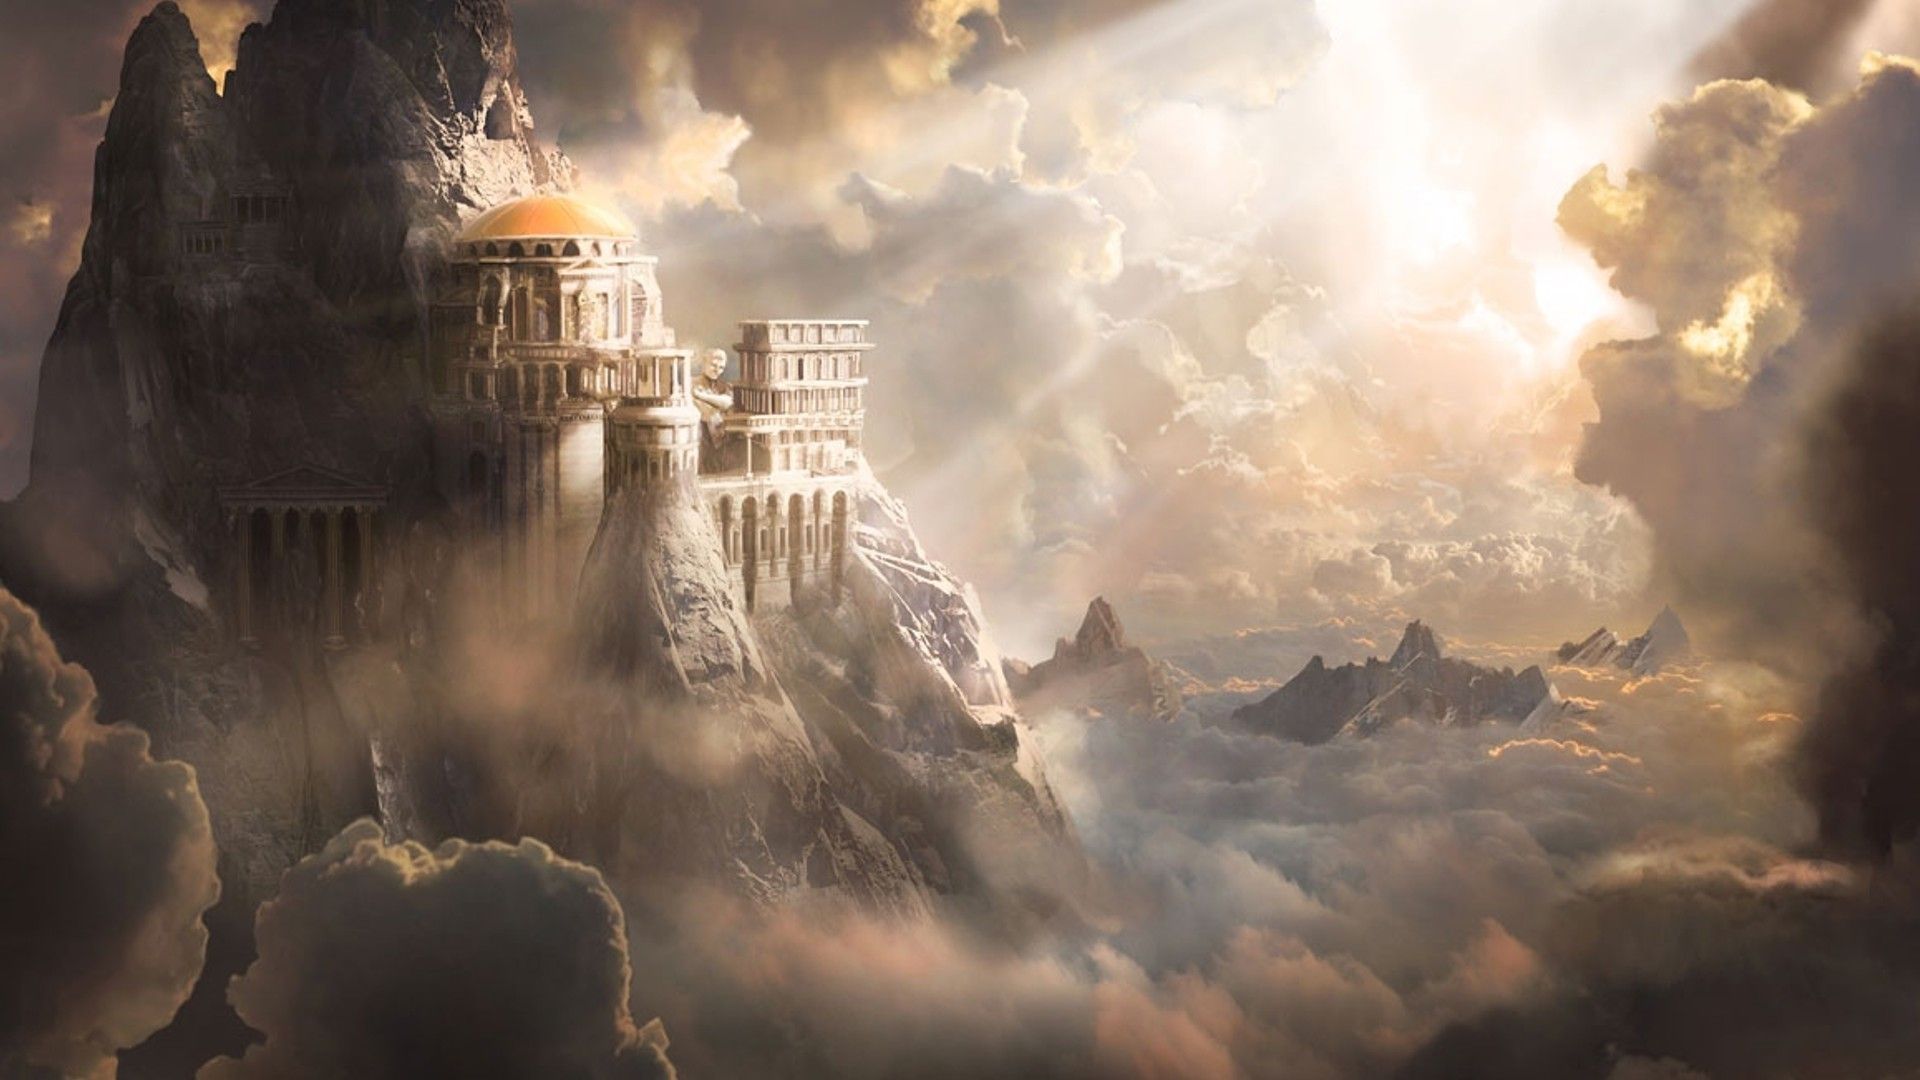 Castle in the clouds - Greek mythology